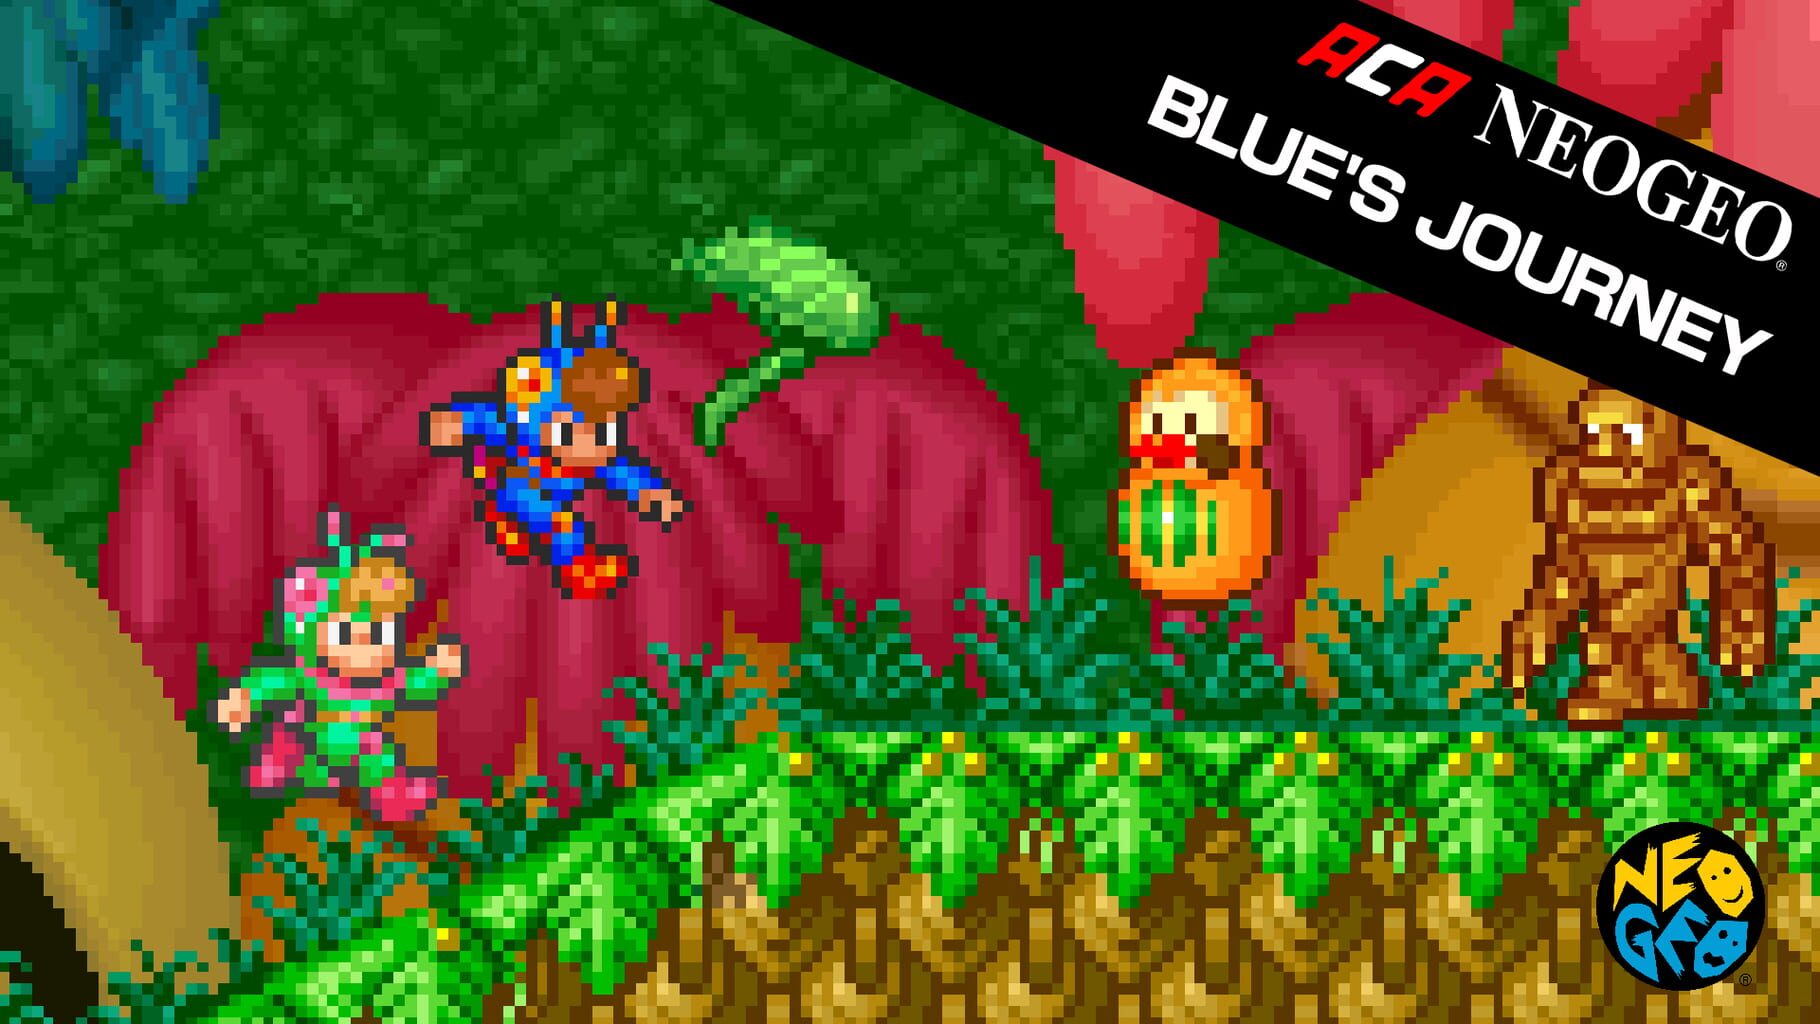 ACA Neo Geo: Blue's Journey artwork